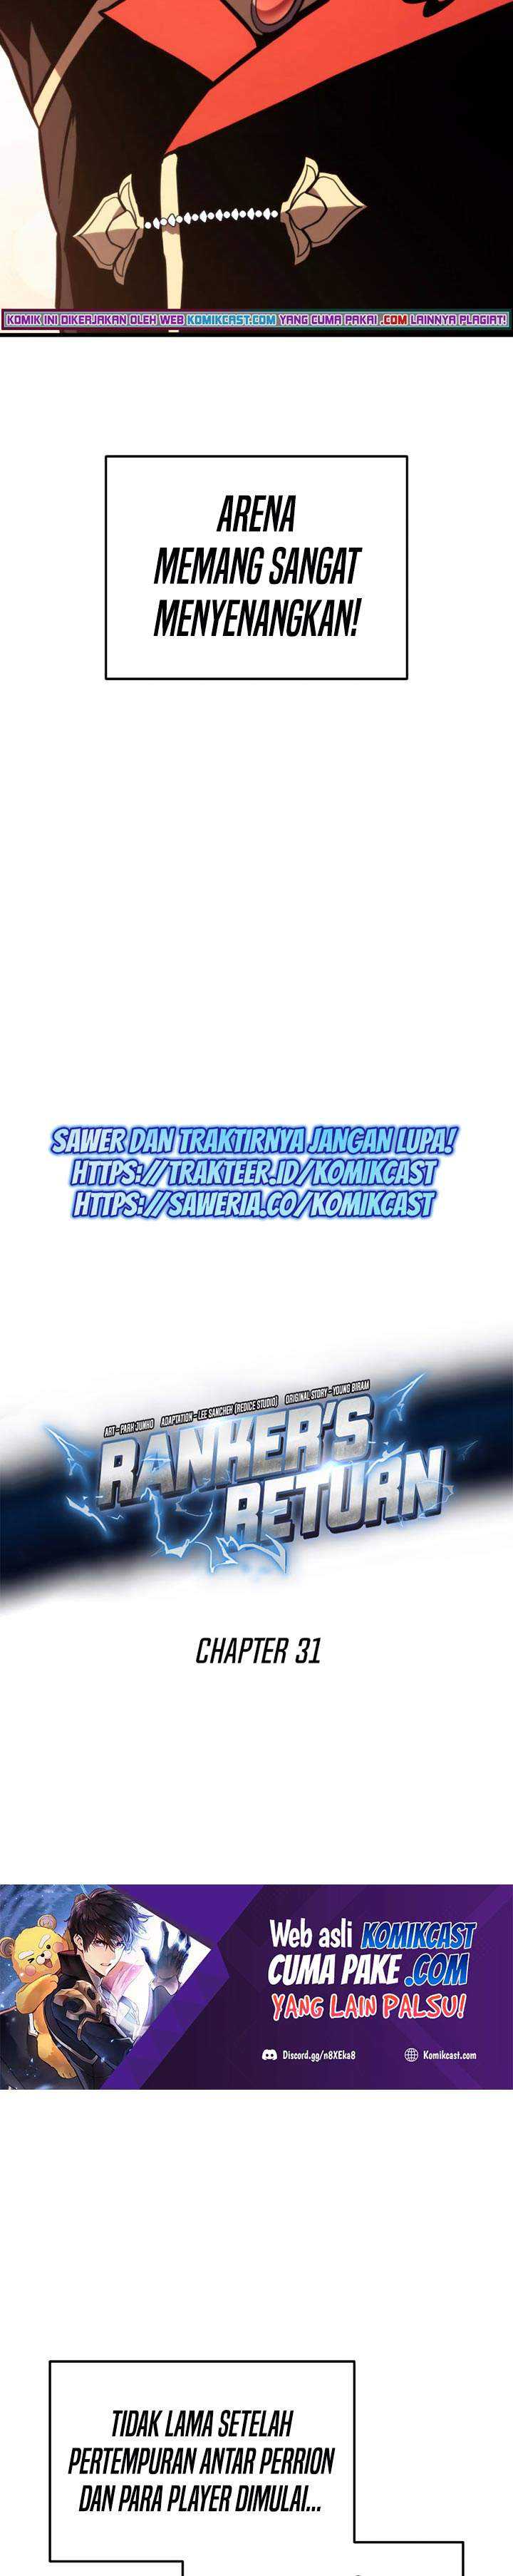 Ranker'S Return (Remake) Chapter 31 - 337